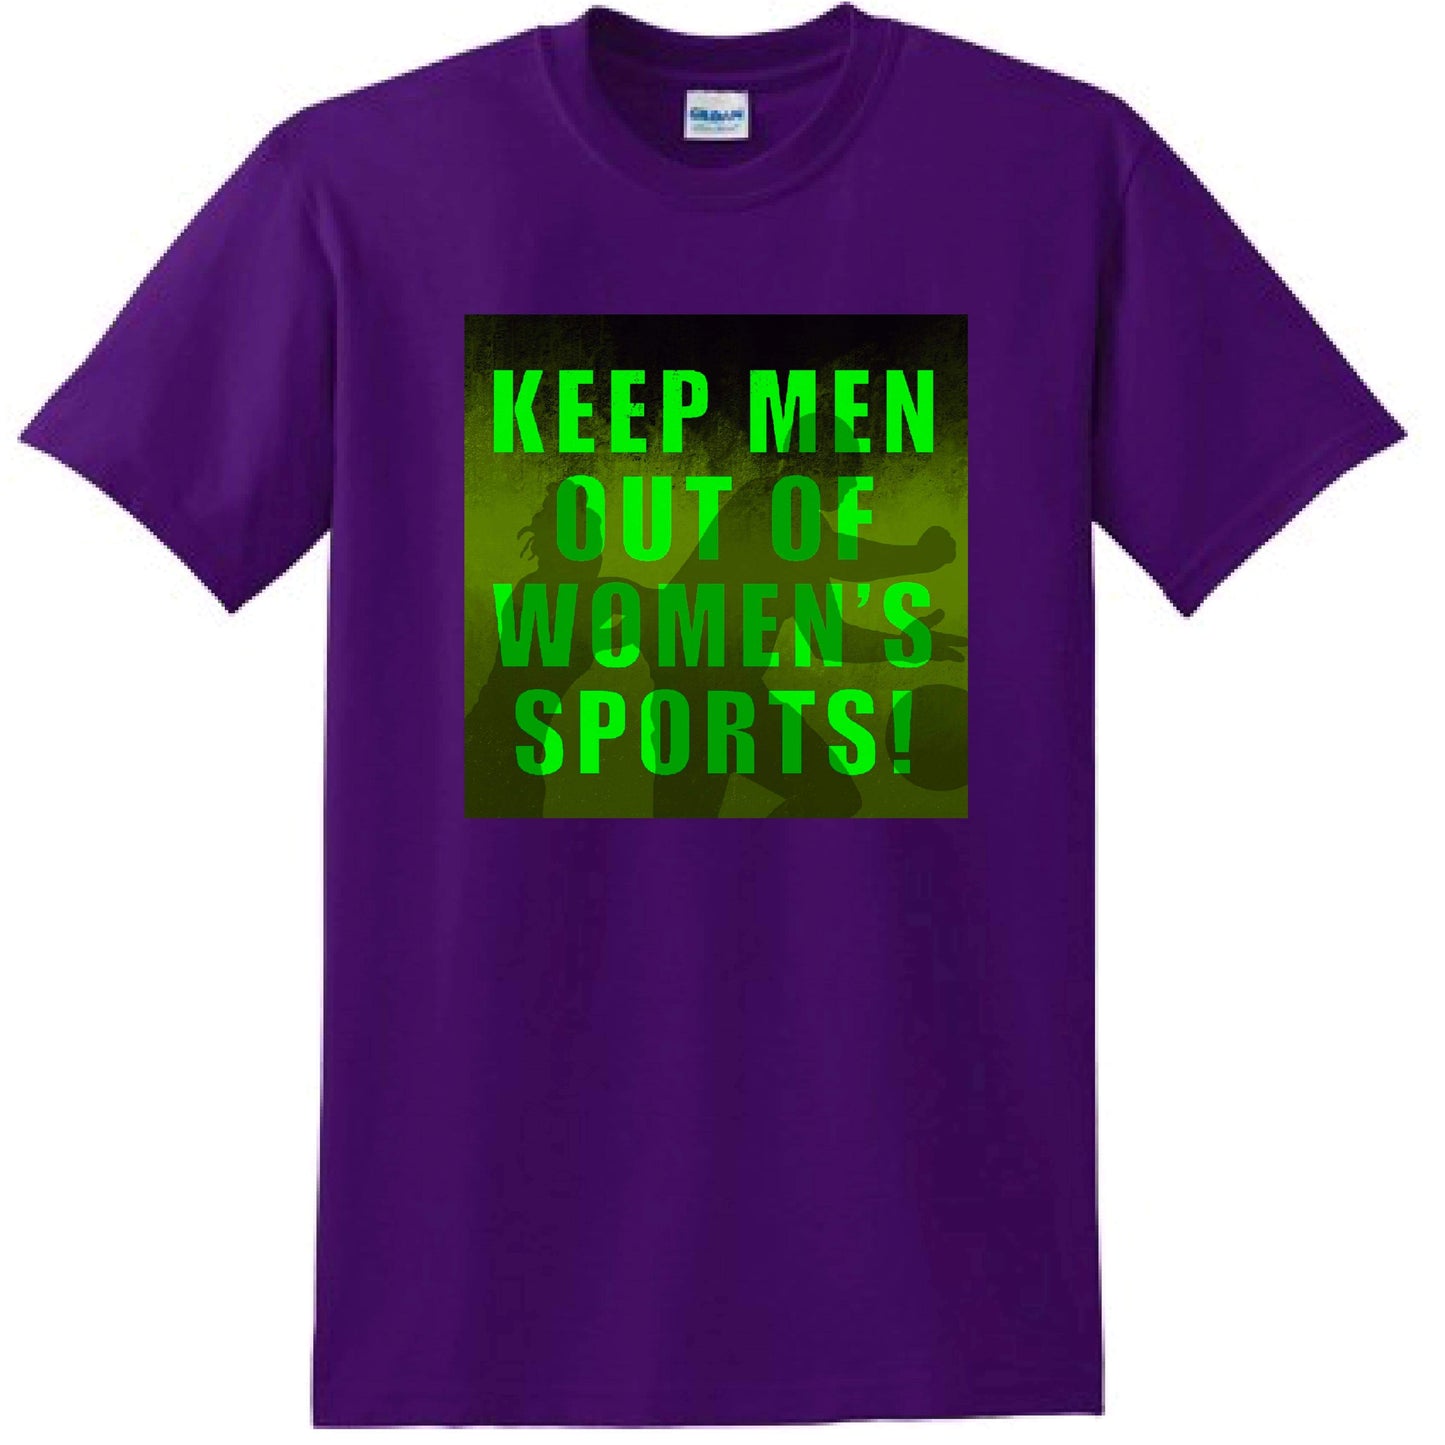 SPORTS! T-Shirt